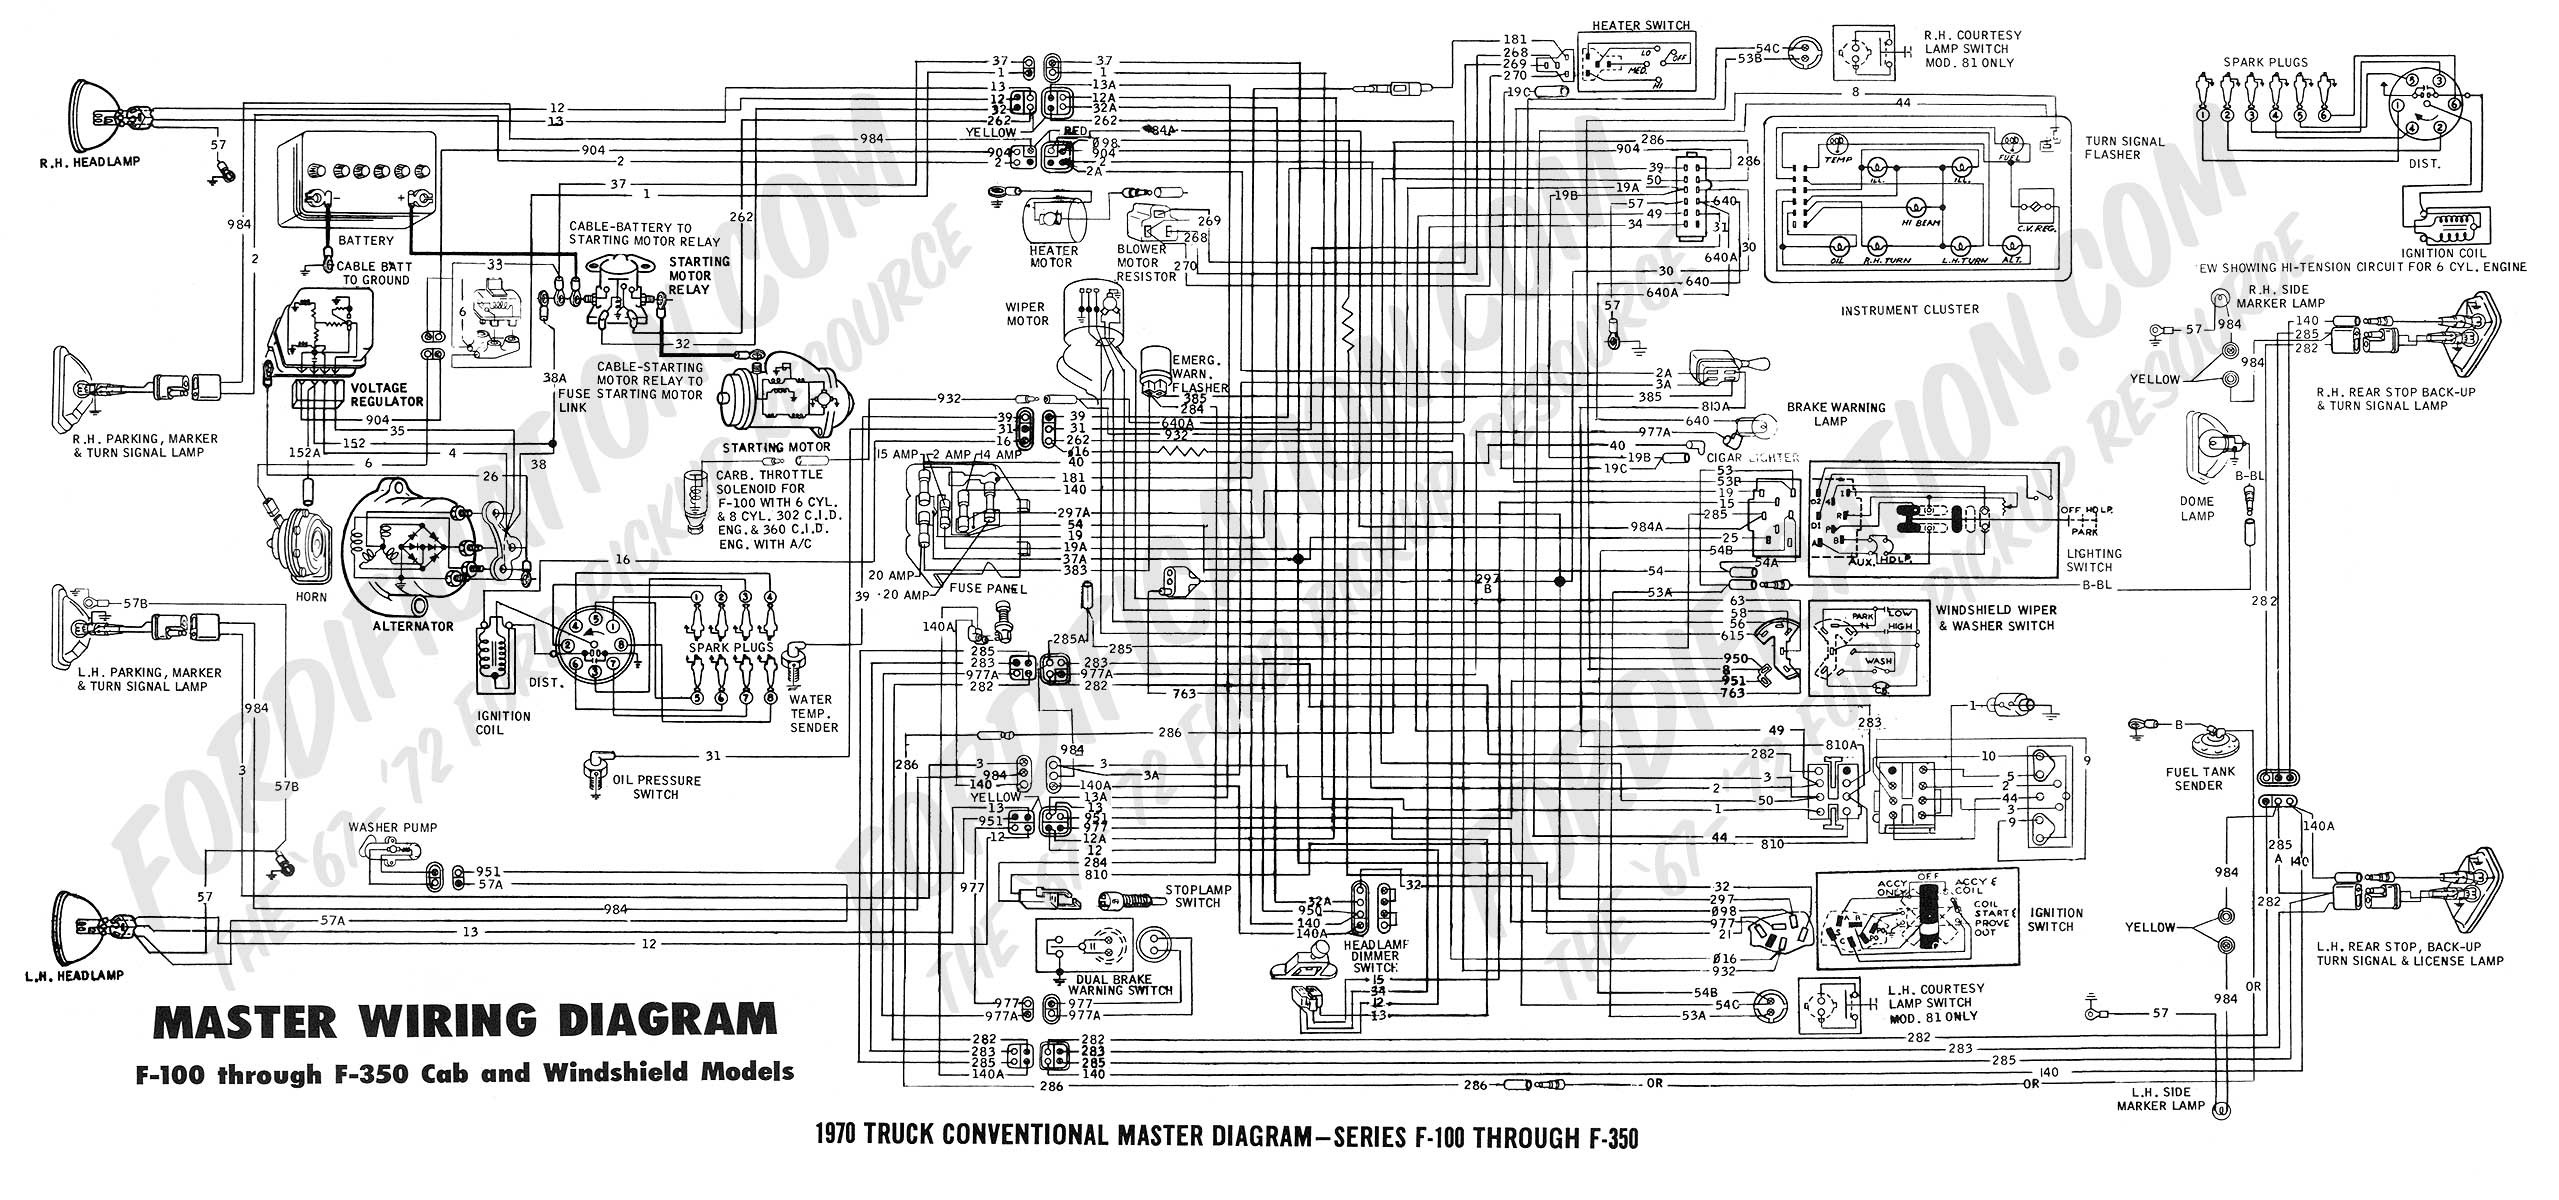 1987 ford F700 Brake System Diagram Diagram] Wiring Diagram for 1968 ford F250 Full Quality Of 1987 ford F700 Brake System Diagram